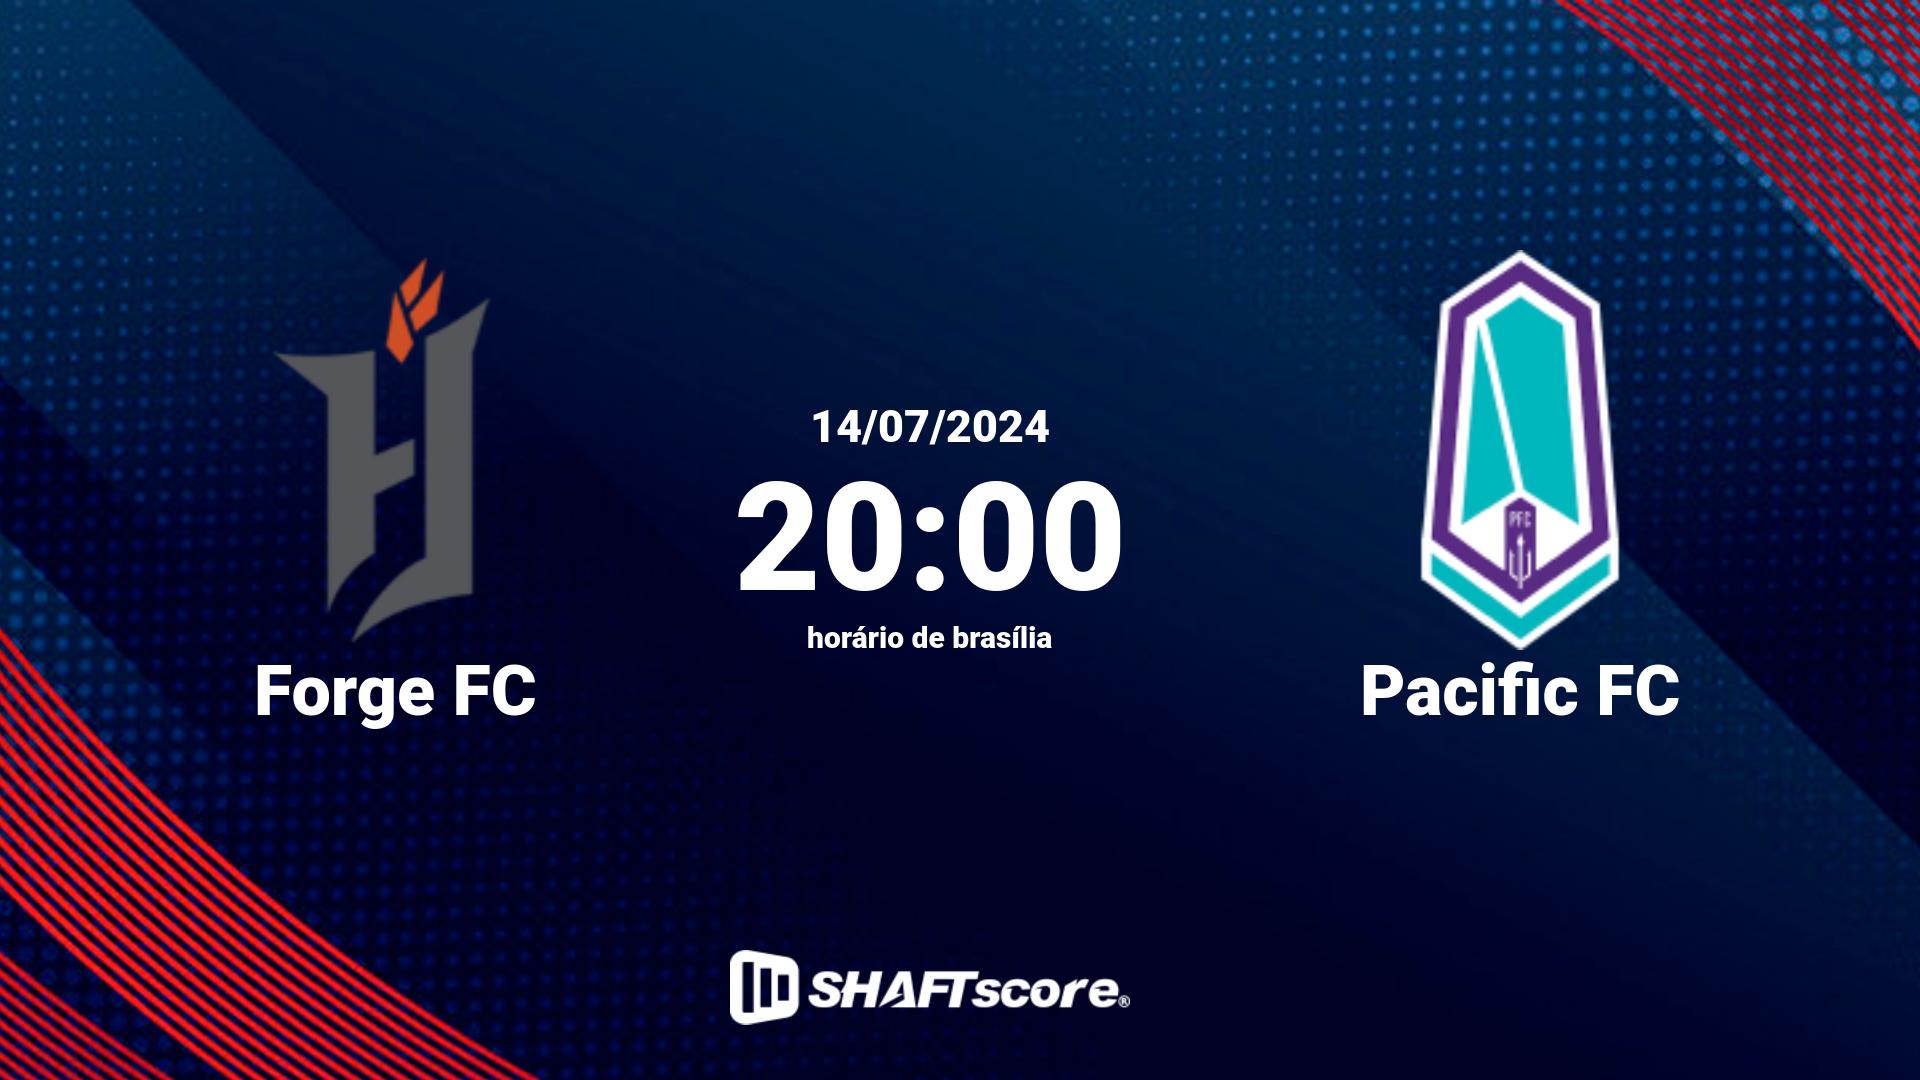 Estatísticas do jogo Forge FC vs Pacific FC 14.07 20:00